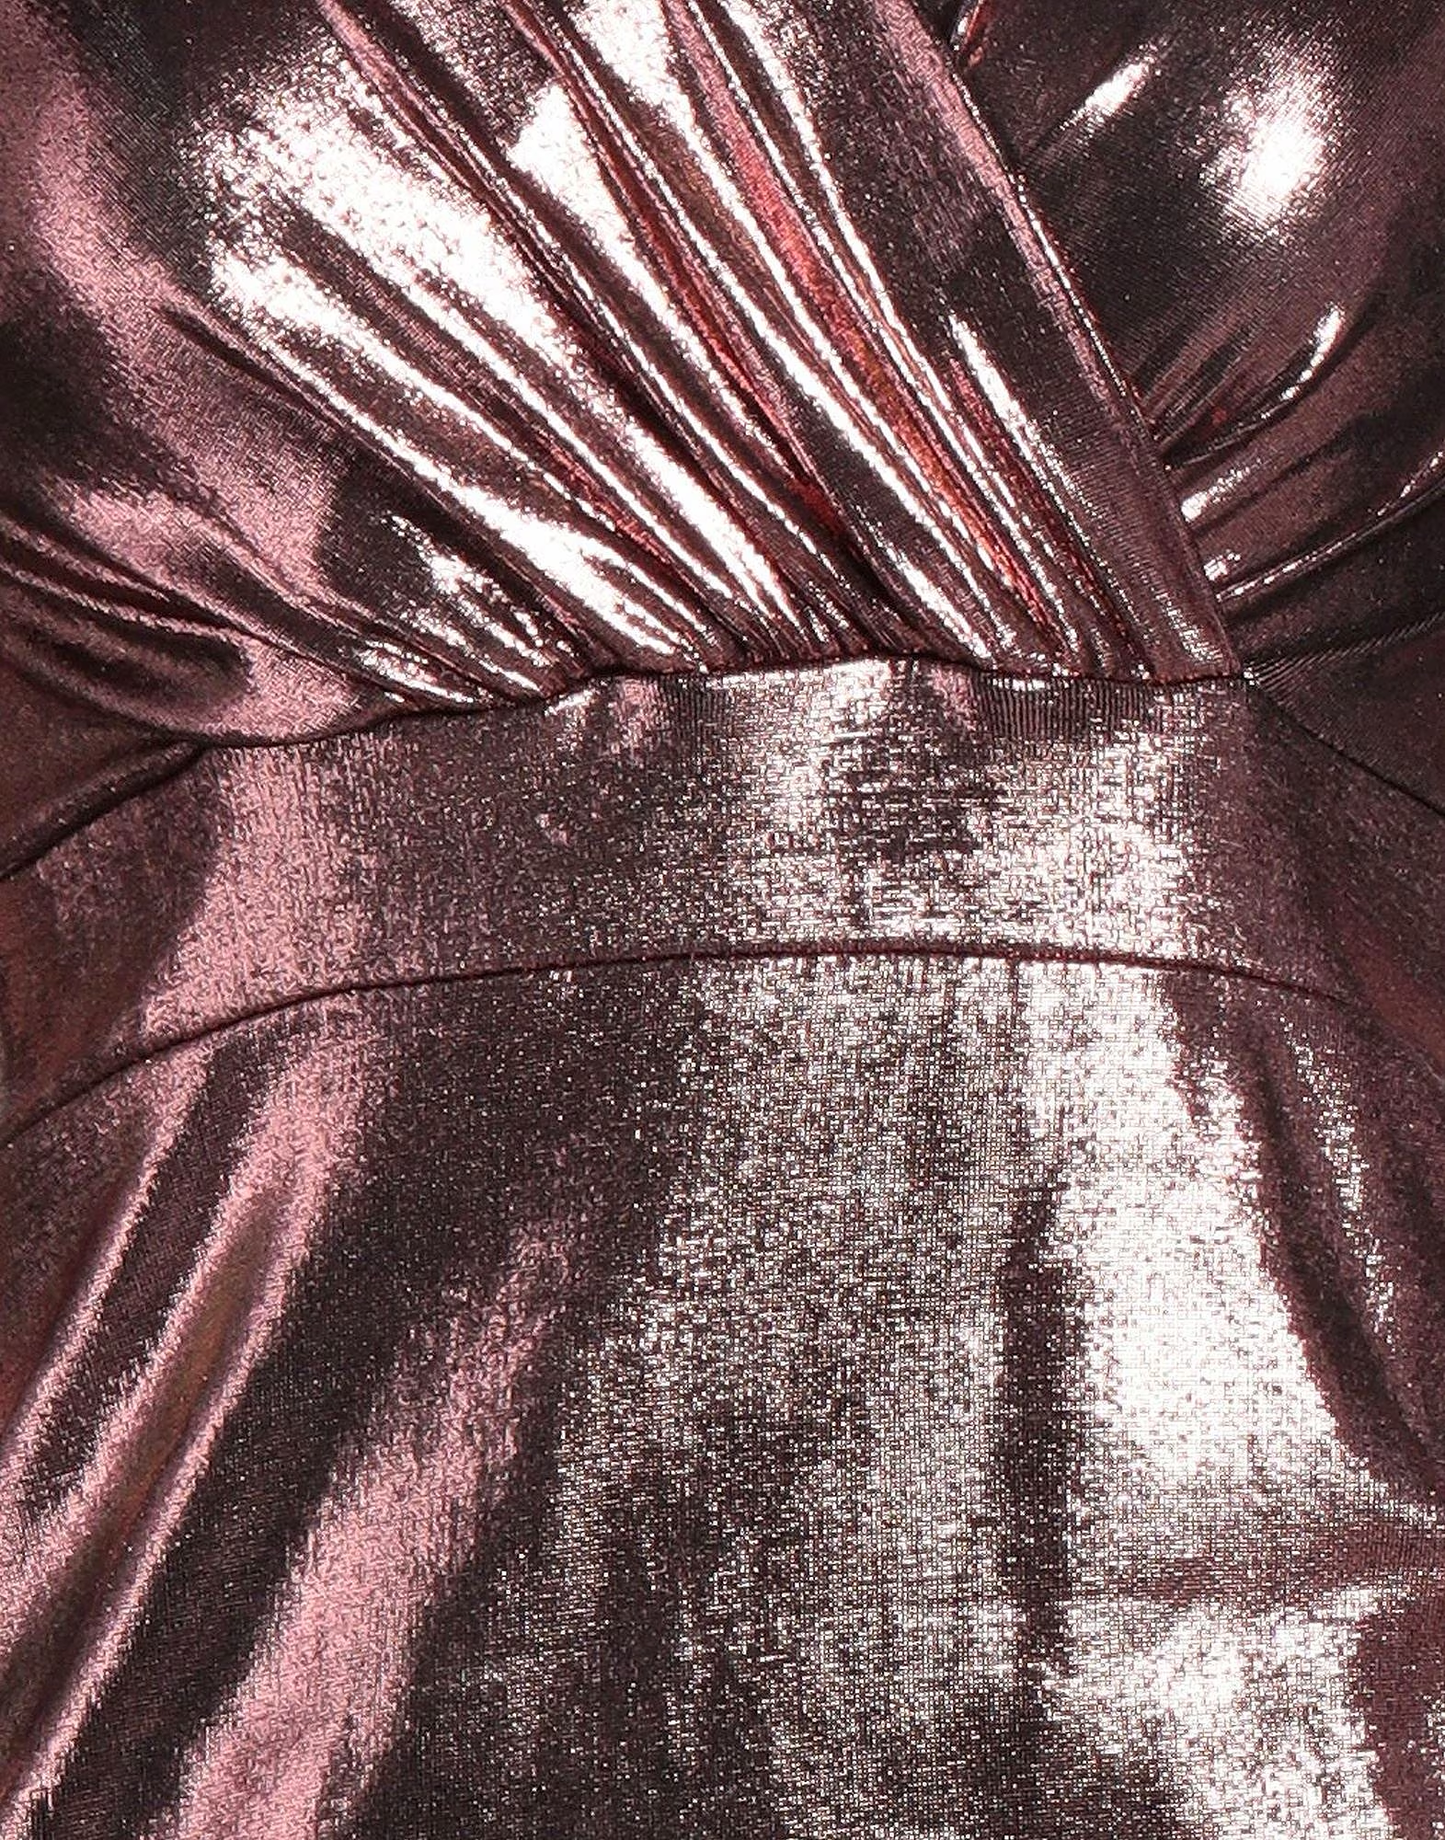 PARIOLI DRESSES  - Parioli  Metallic Mini Dress - Pink